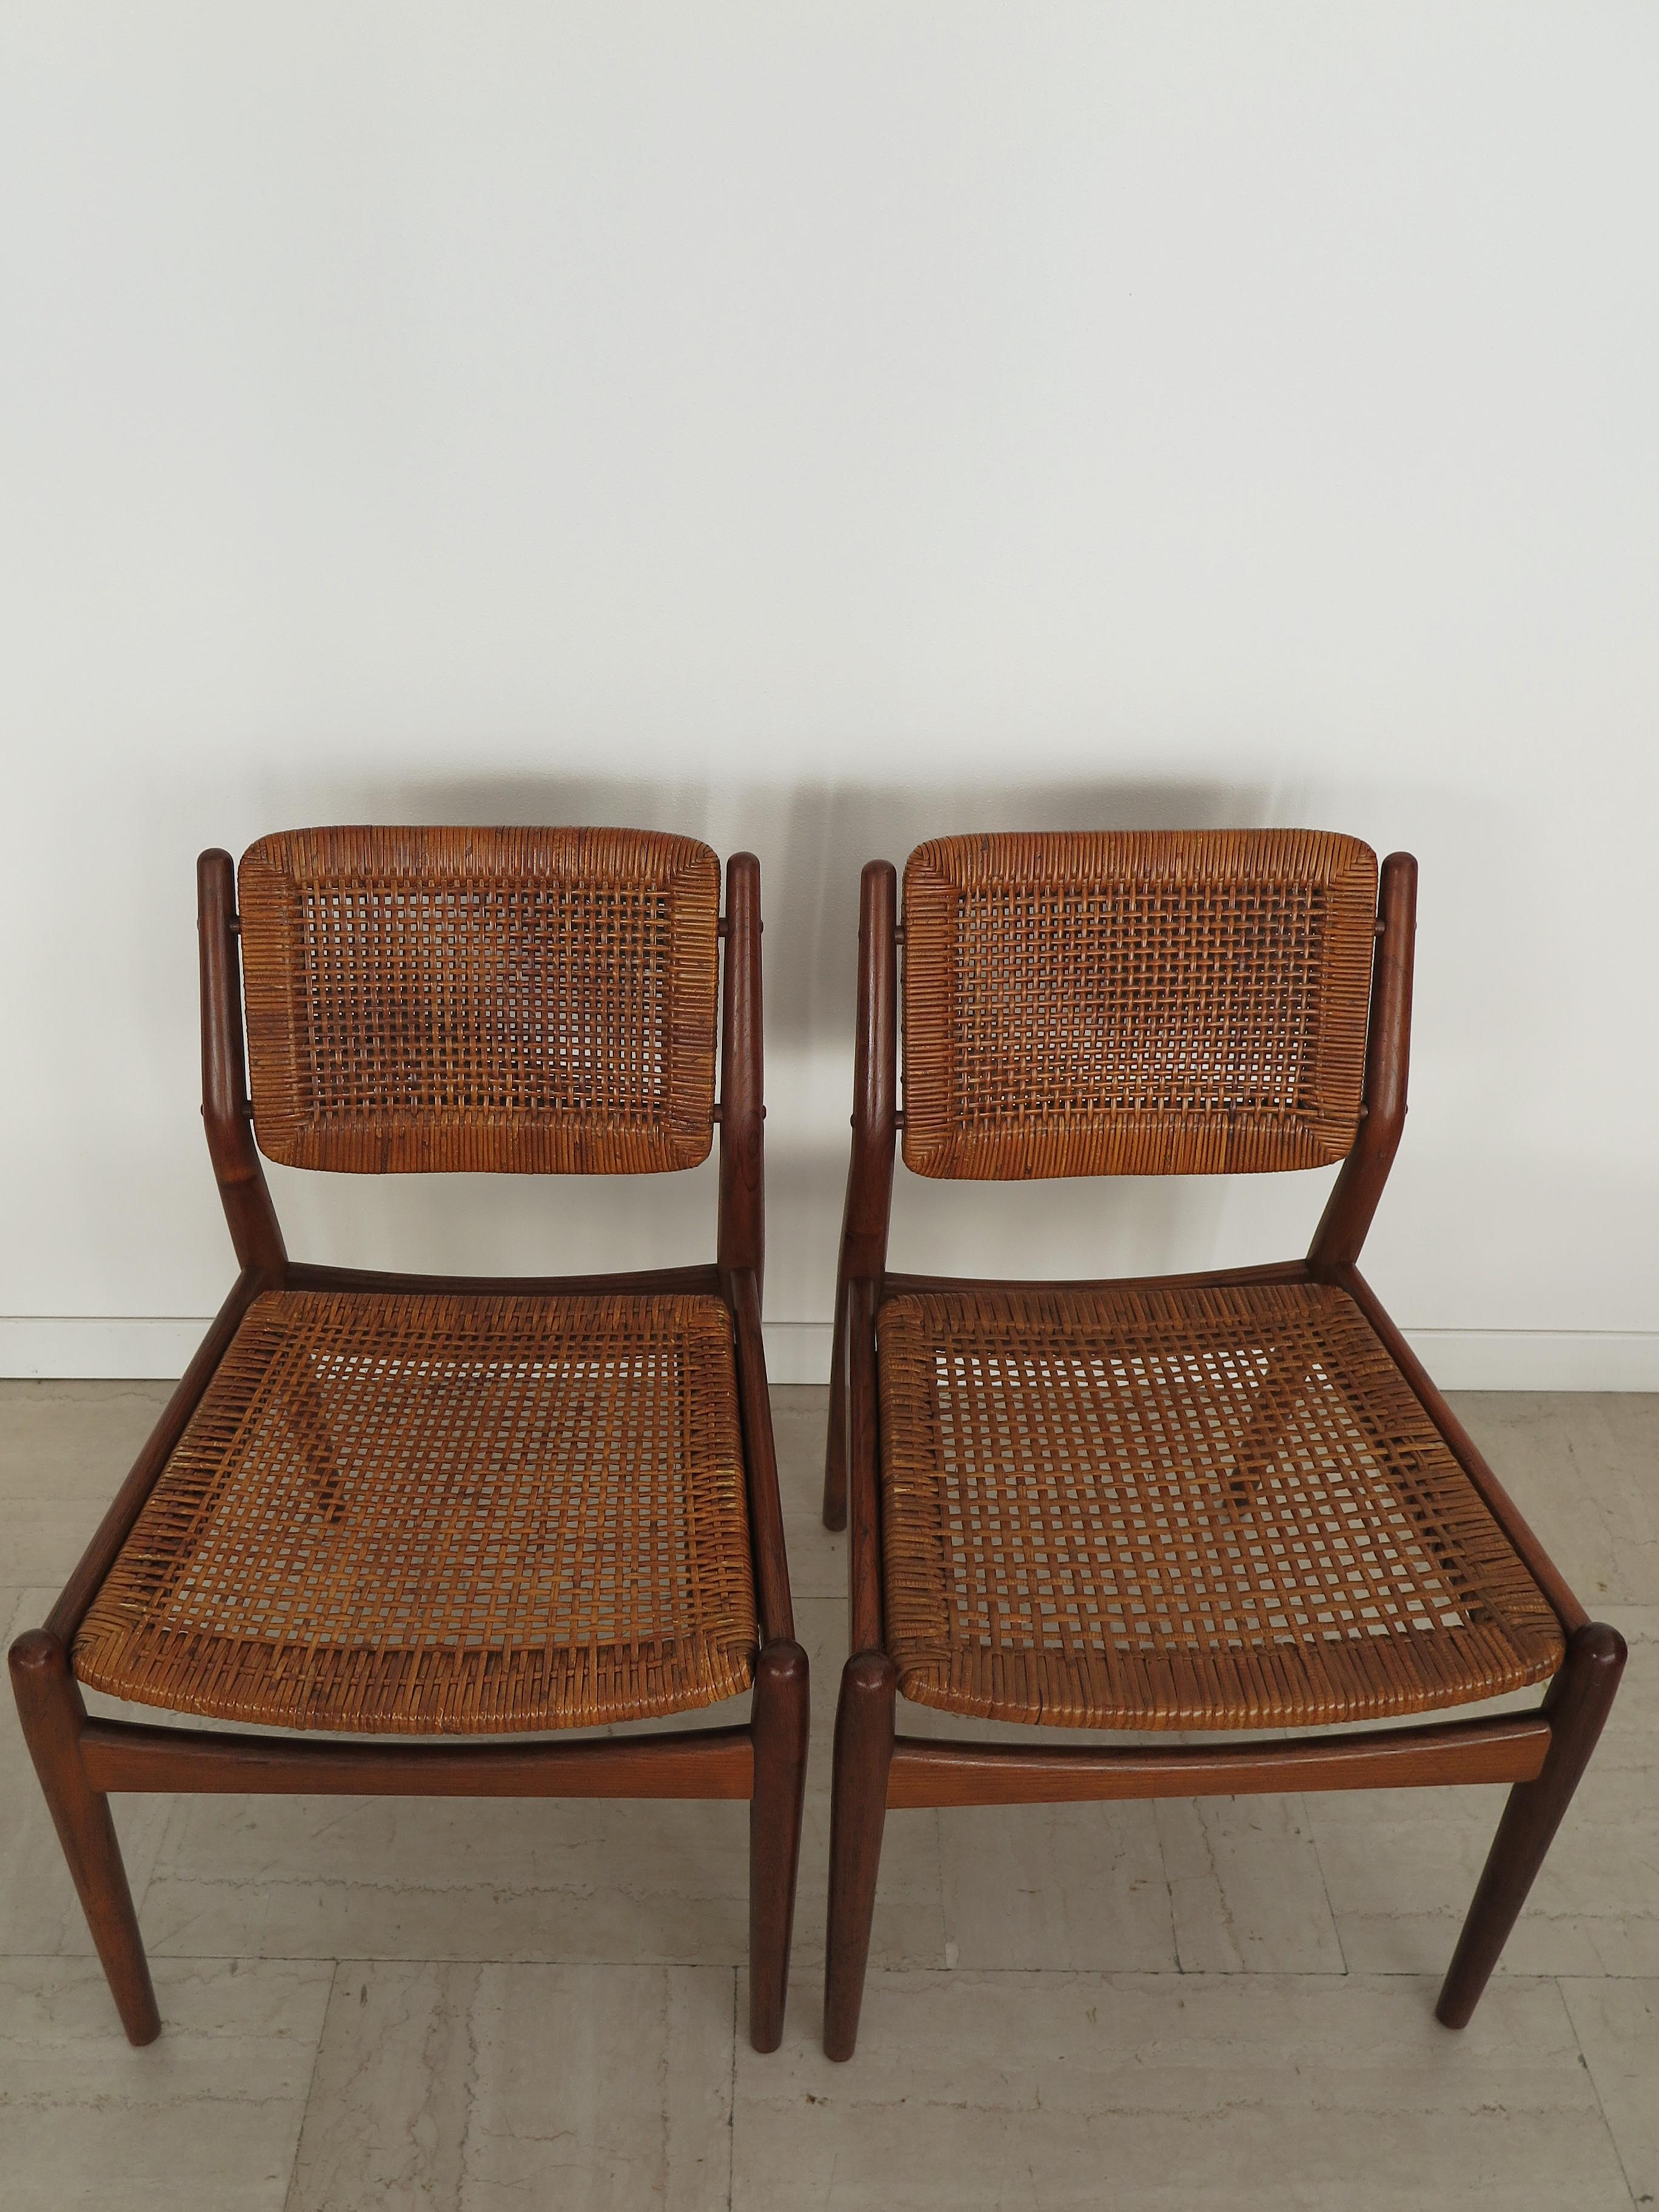 Scandinavian Modern Arne Vodder Midcentury Scandinavian Teak Rattan Chairs for Sibast 1950s For Sale